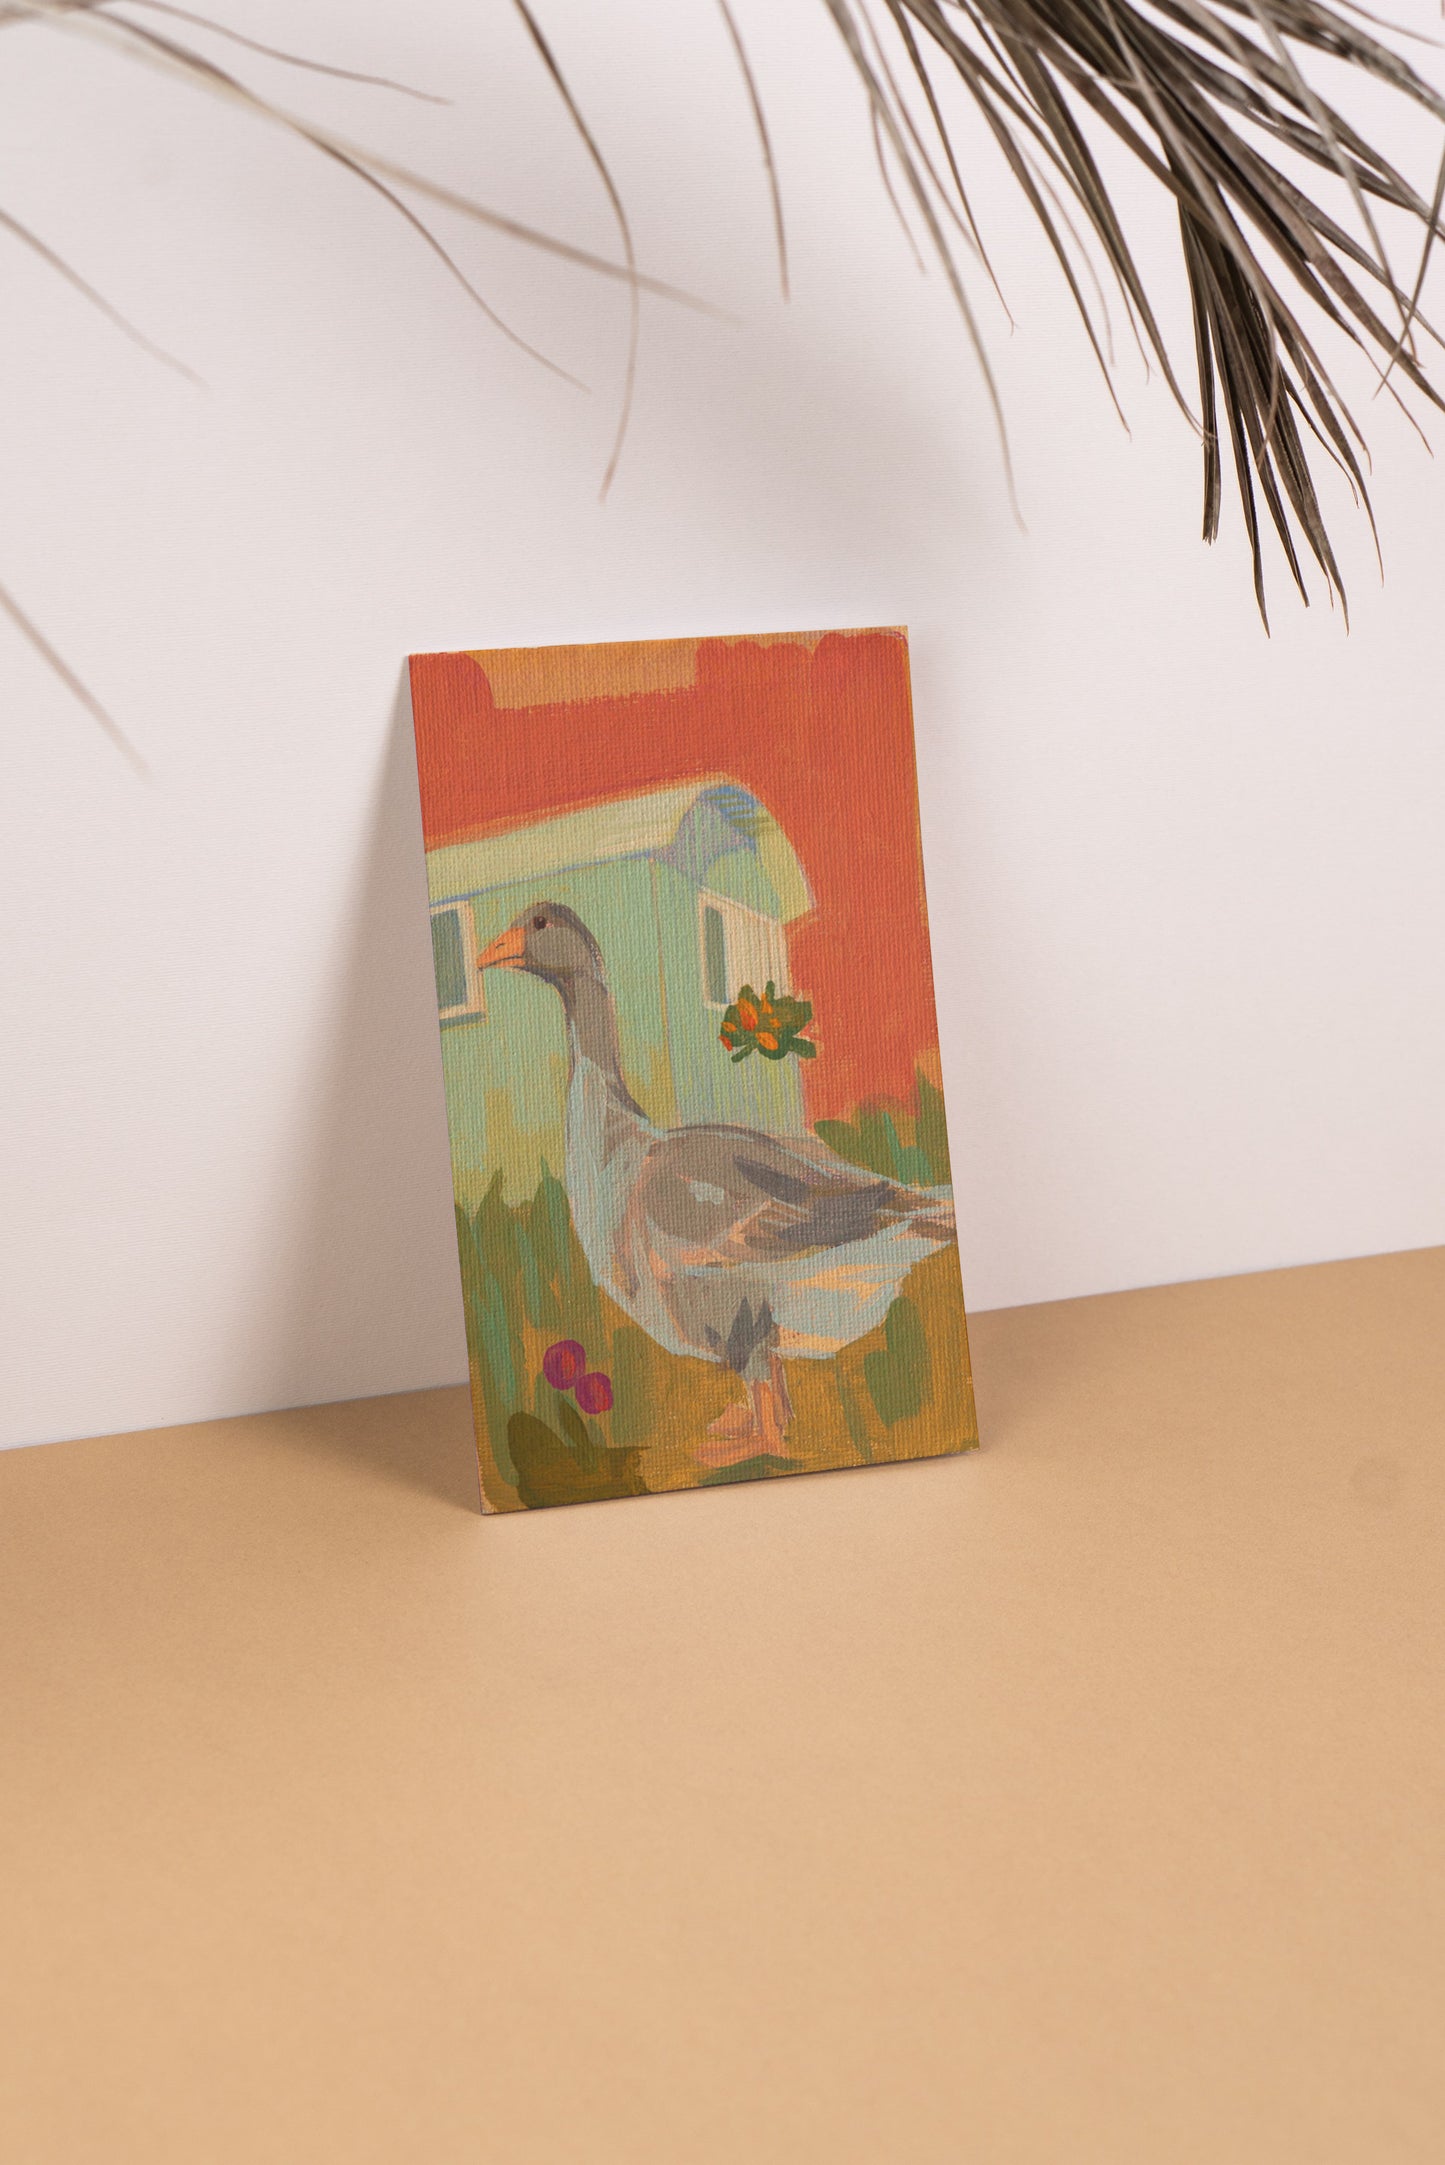 Graugans, Unikat, Malerei, handgemaltes Einzelstück, 10x15 cm, inkl. Bilderrahmen